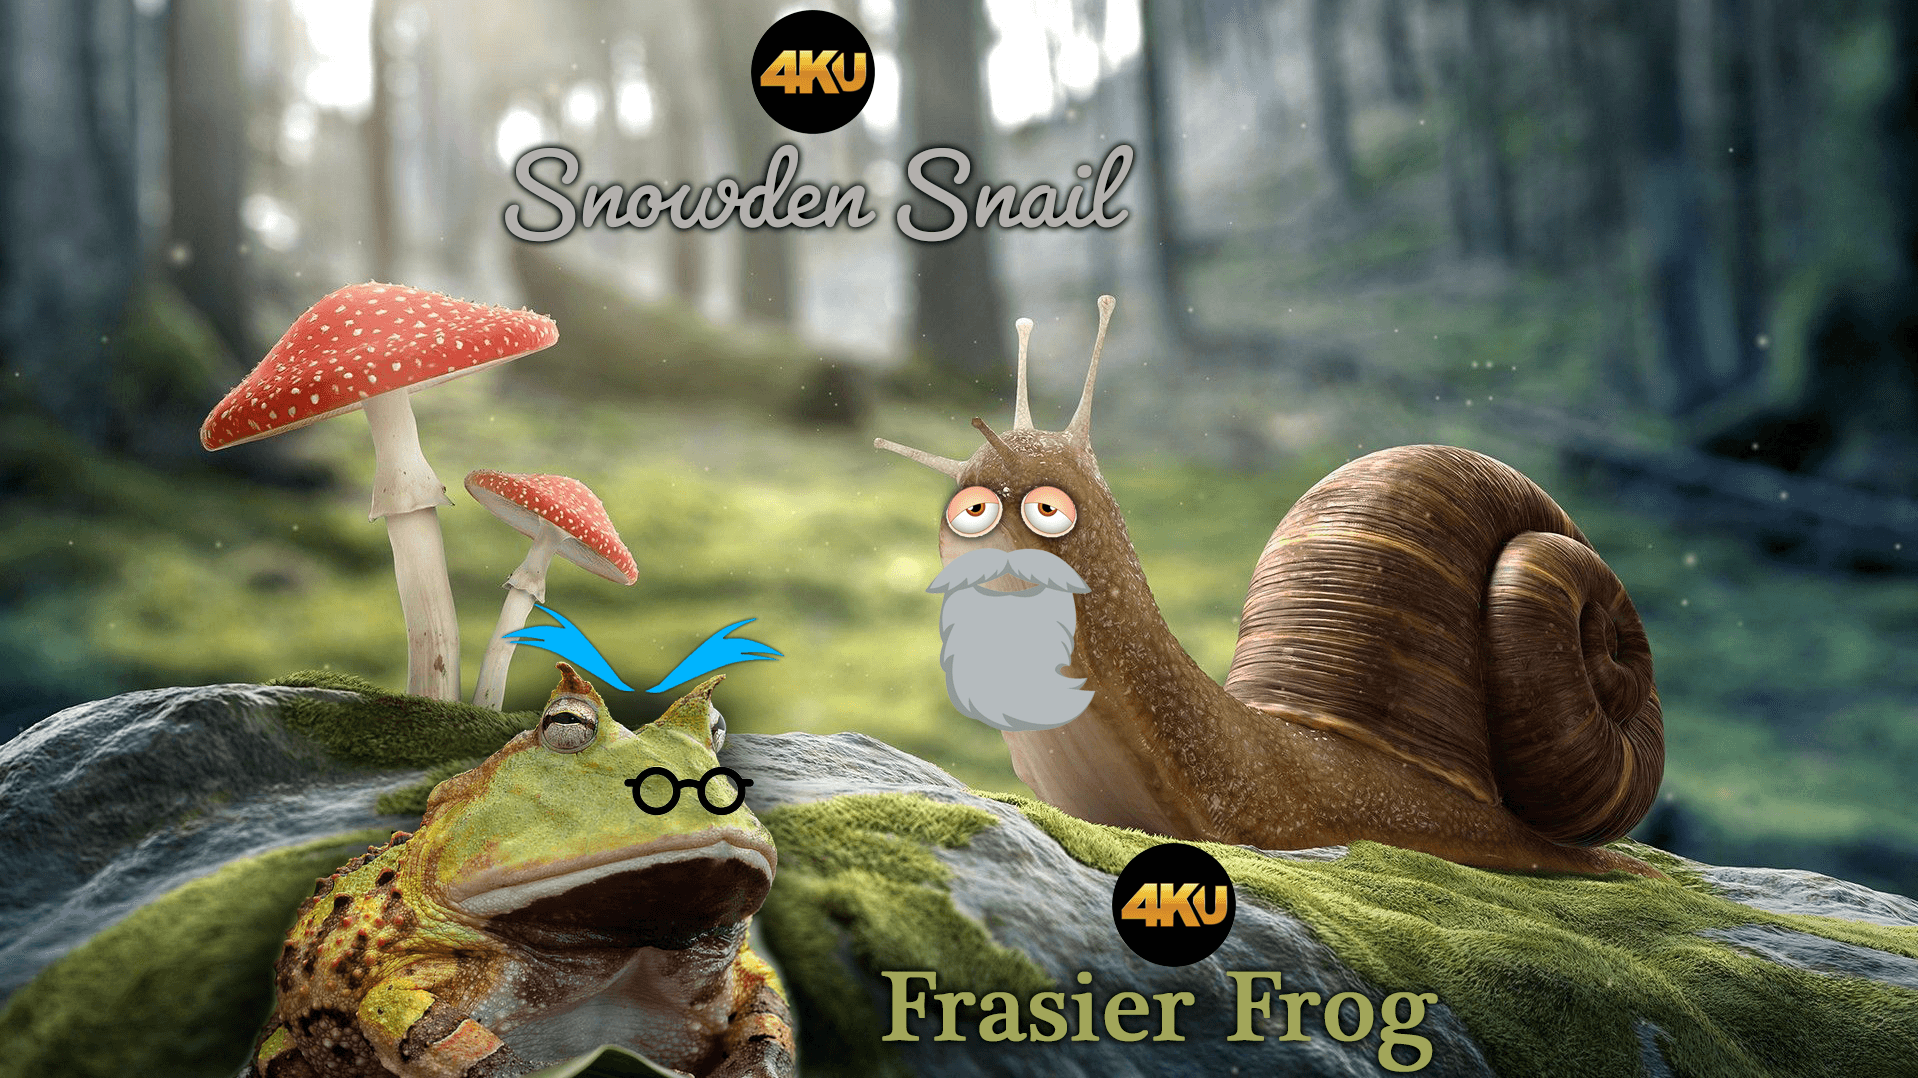 Snowden Snail and Frasier Frog